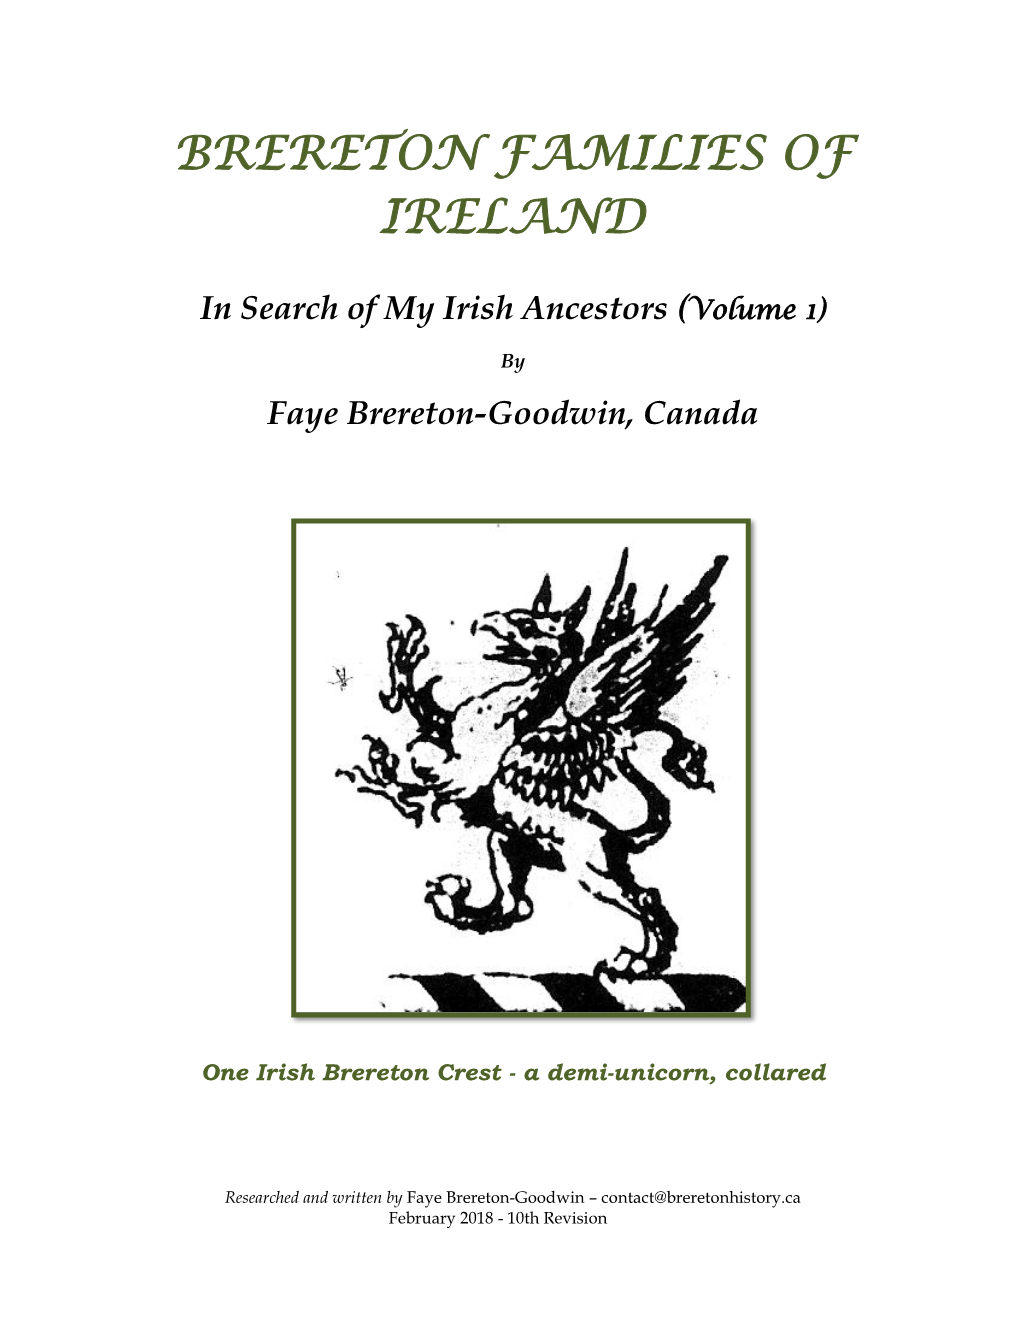 Part Iii the Breretons of Ireland